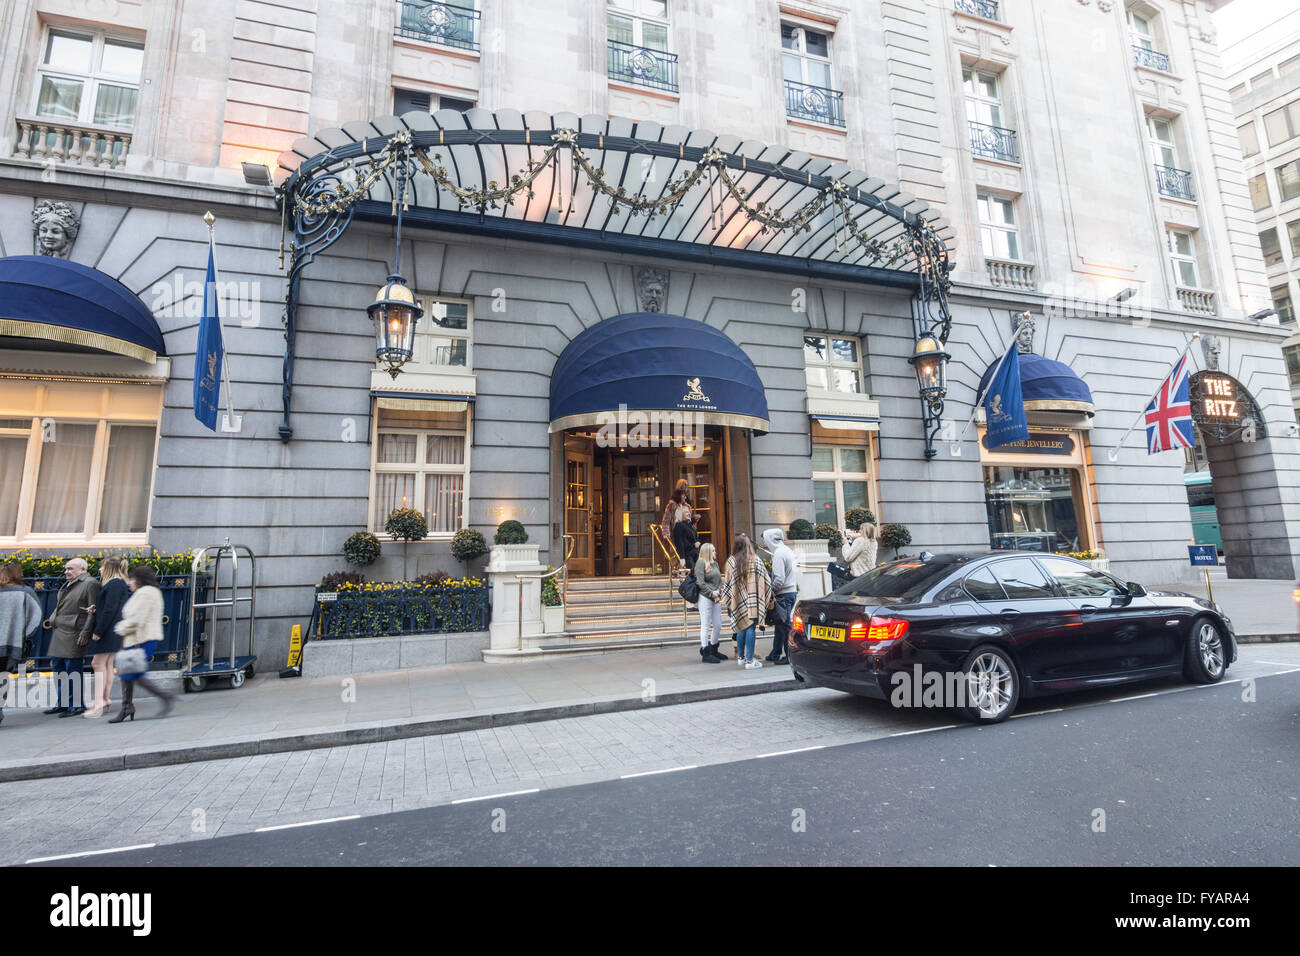 Ritz Hotel London. 5 star hotel Stock Photo - Alamy